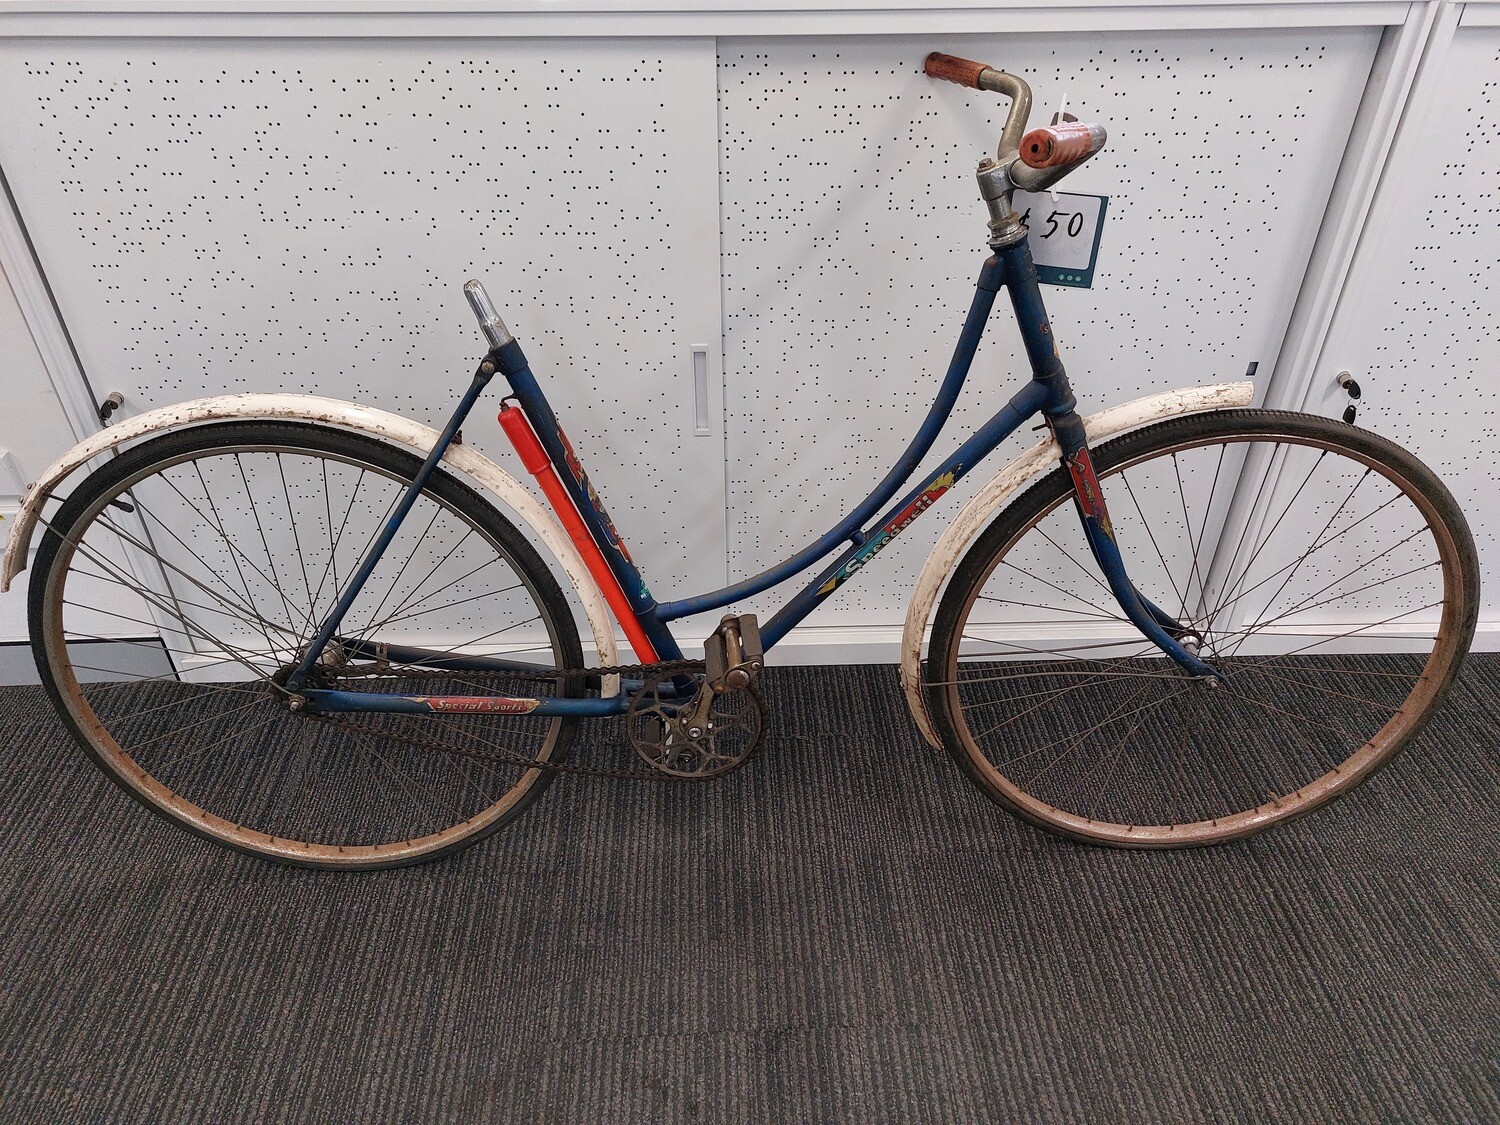 L - Hybrid  - Speedwell - Vintage project bike - SOLD AS IS